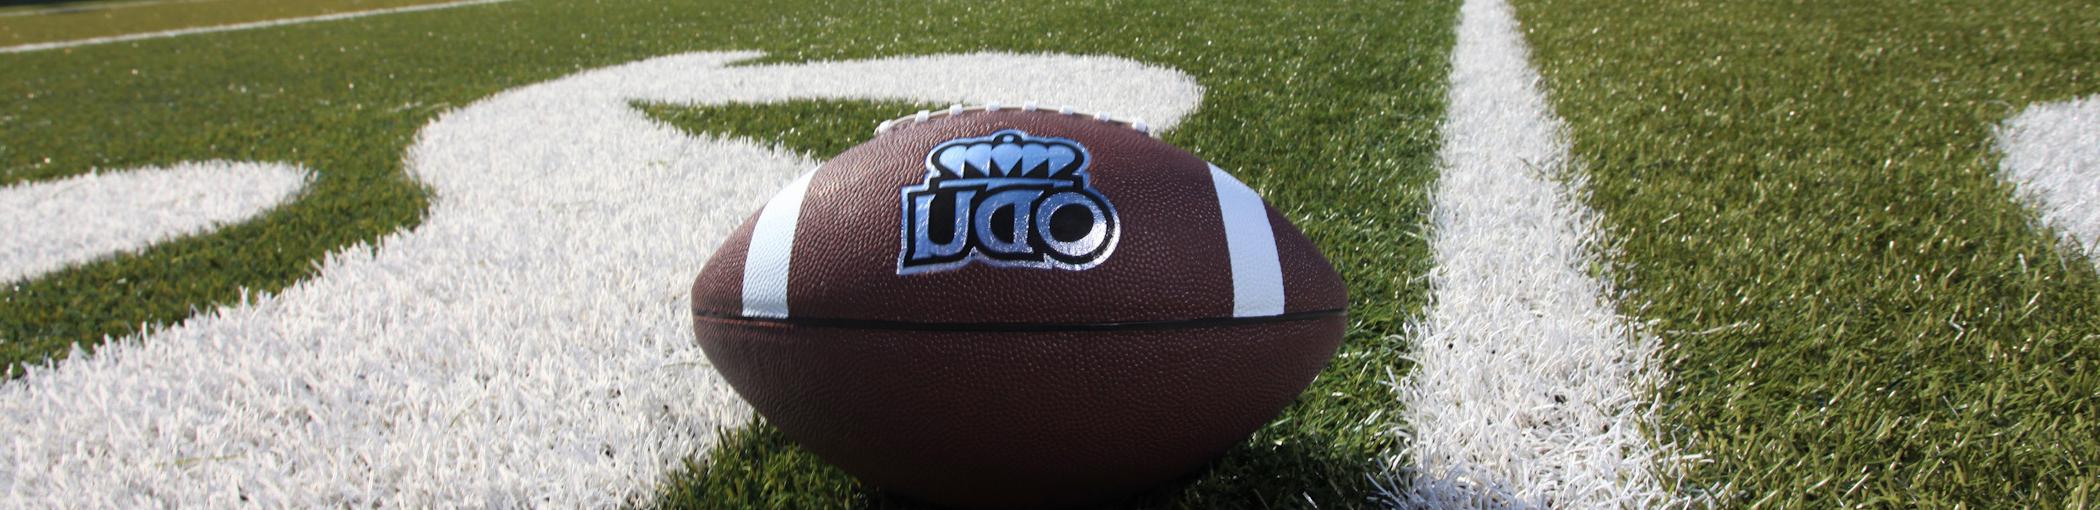 Football with an ODU logo on the field